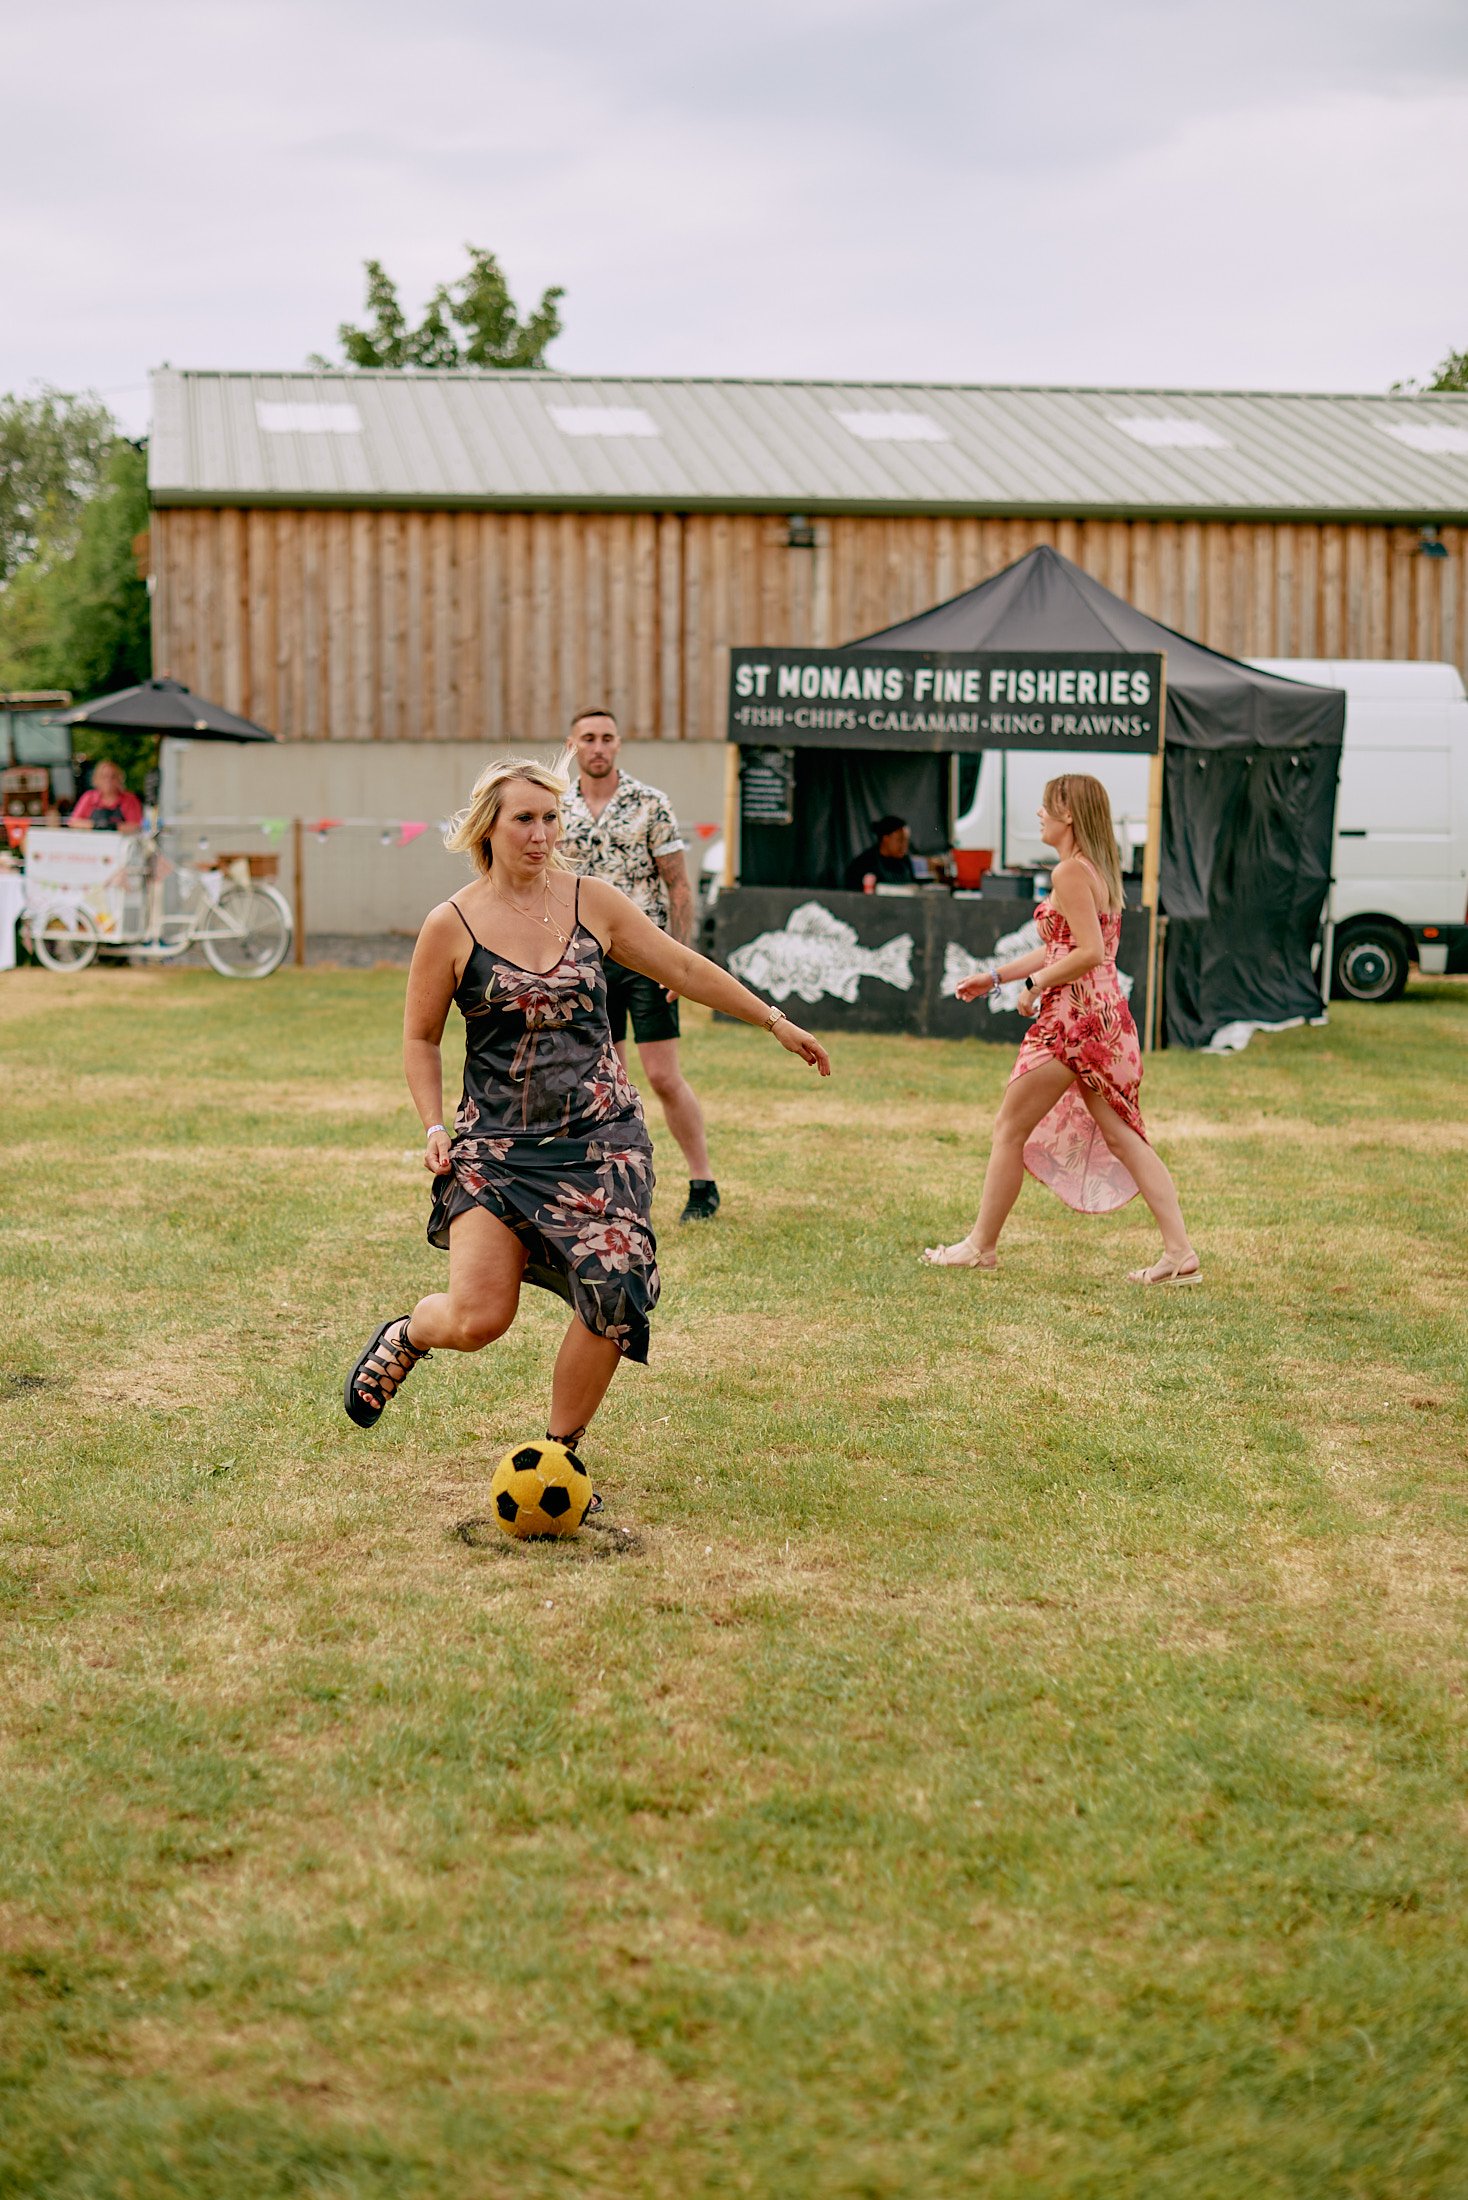 outdoor games at festivals wedding